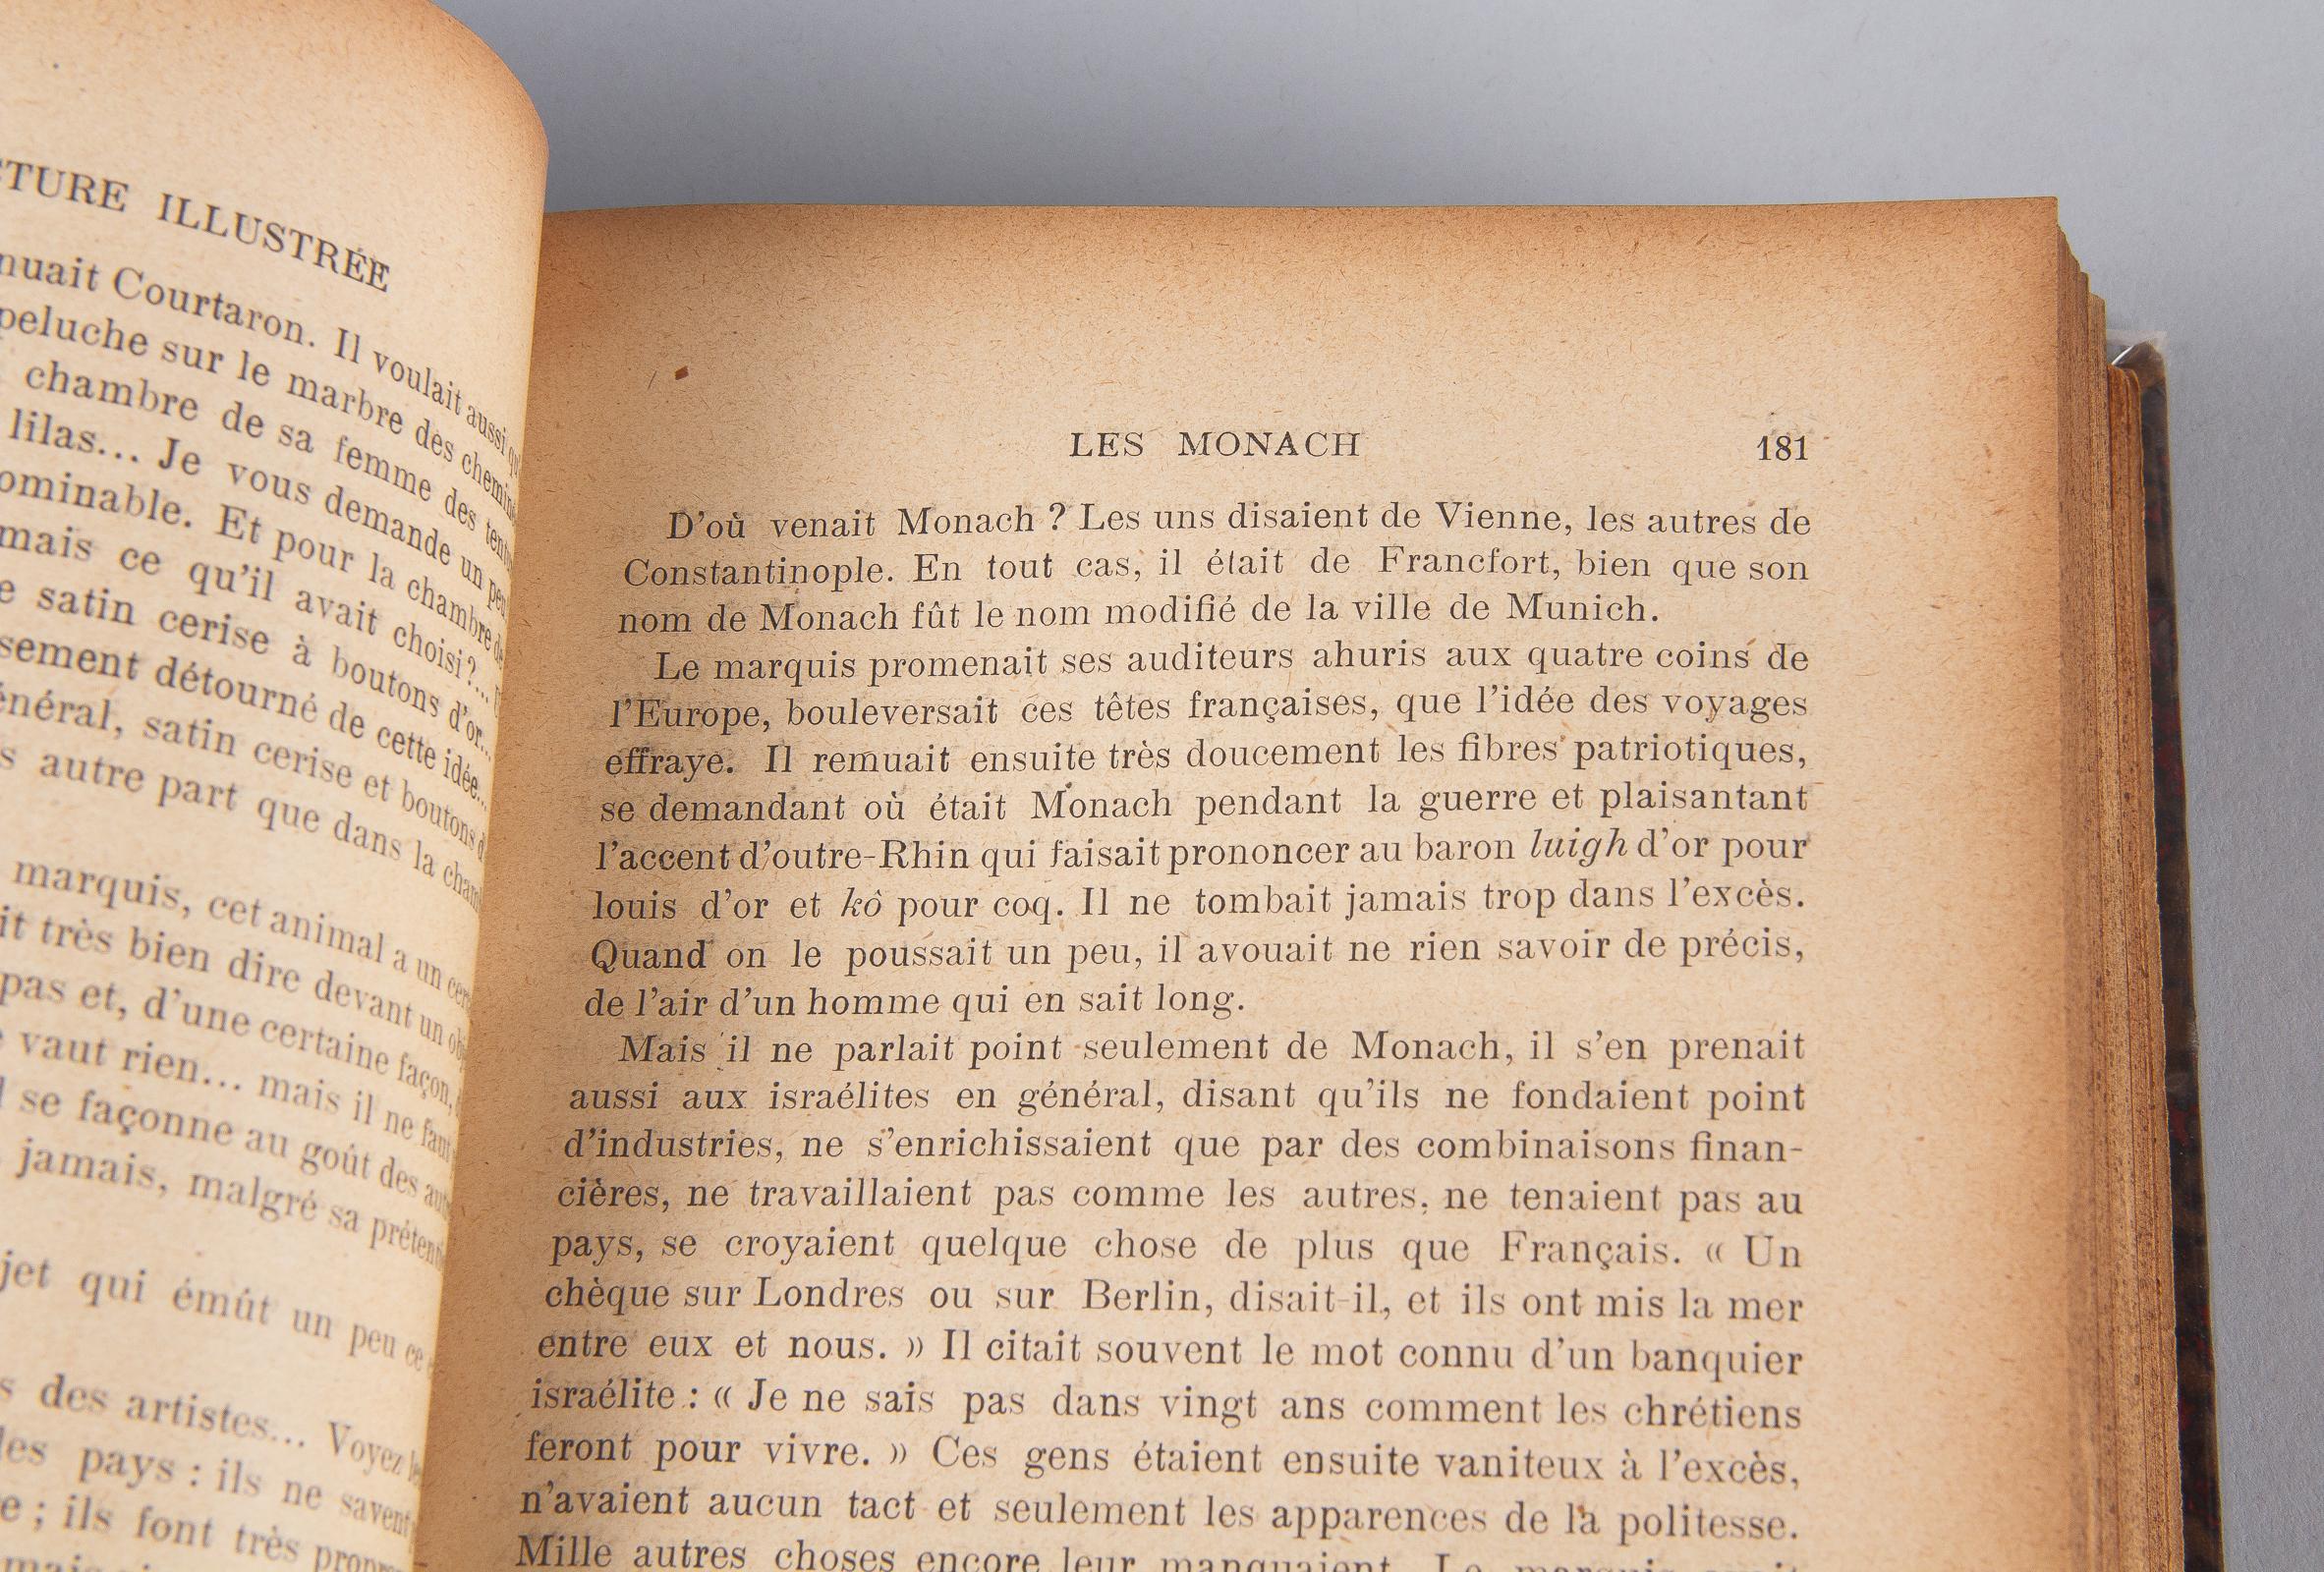 Leather Bound French Books-La Lecture Illustree, Late 1800s 8